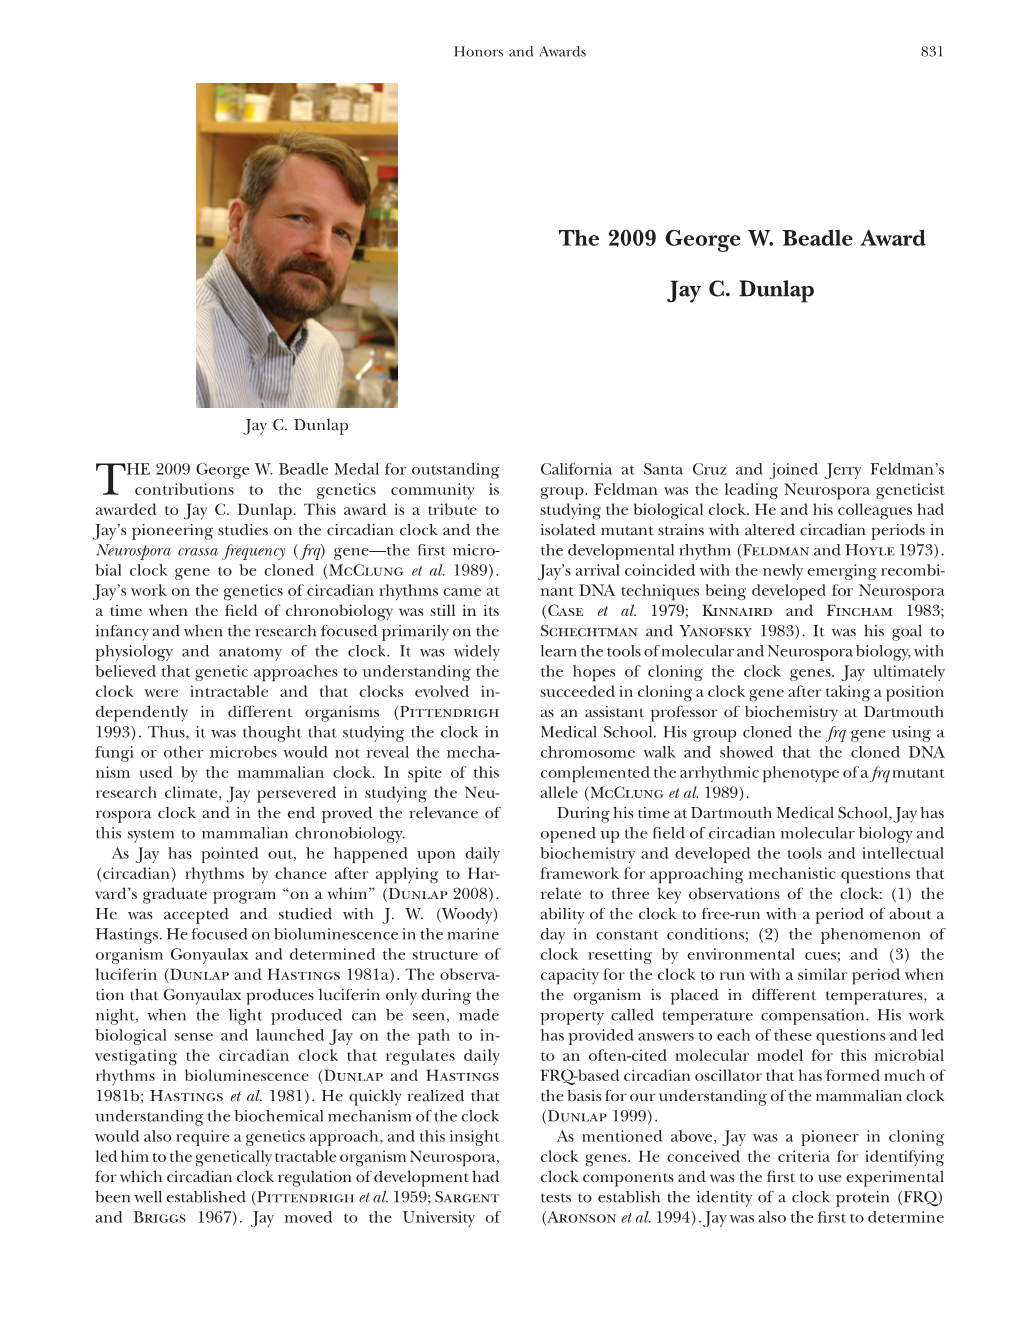 The 2009 George W. Beadle Award Jay C. Dunlap